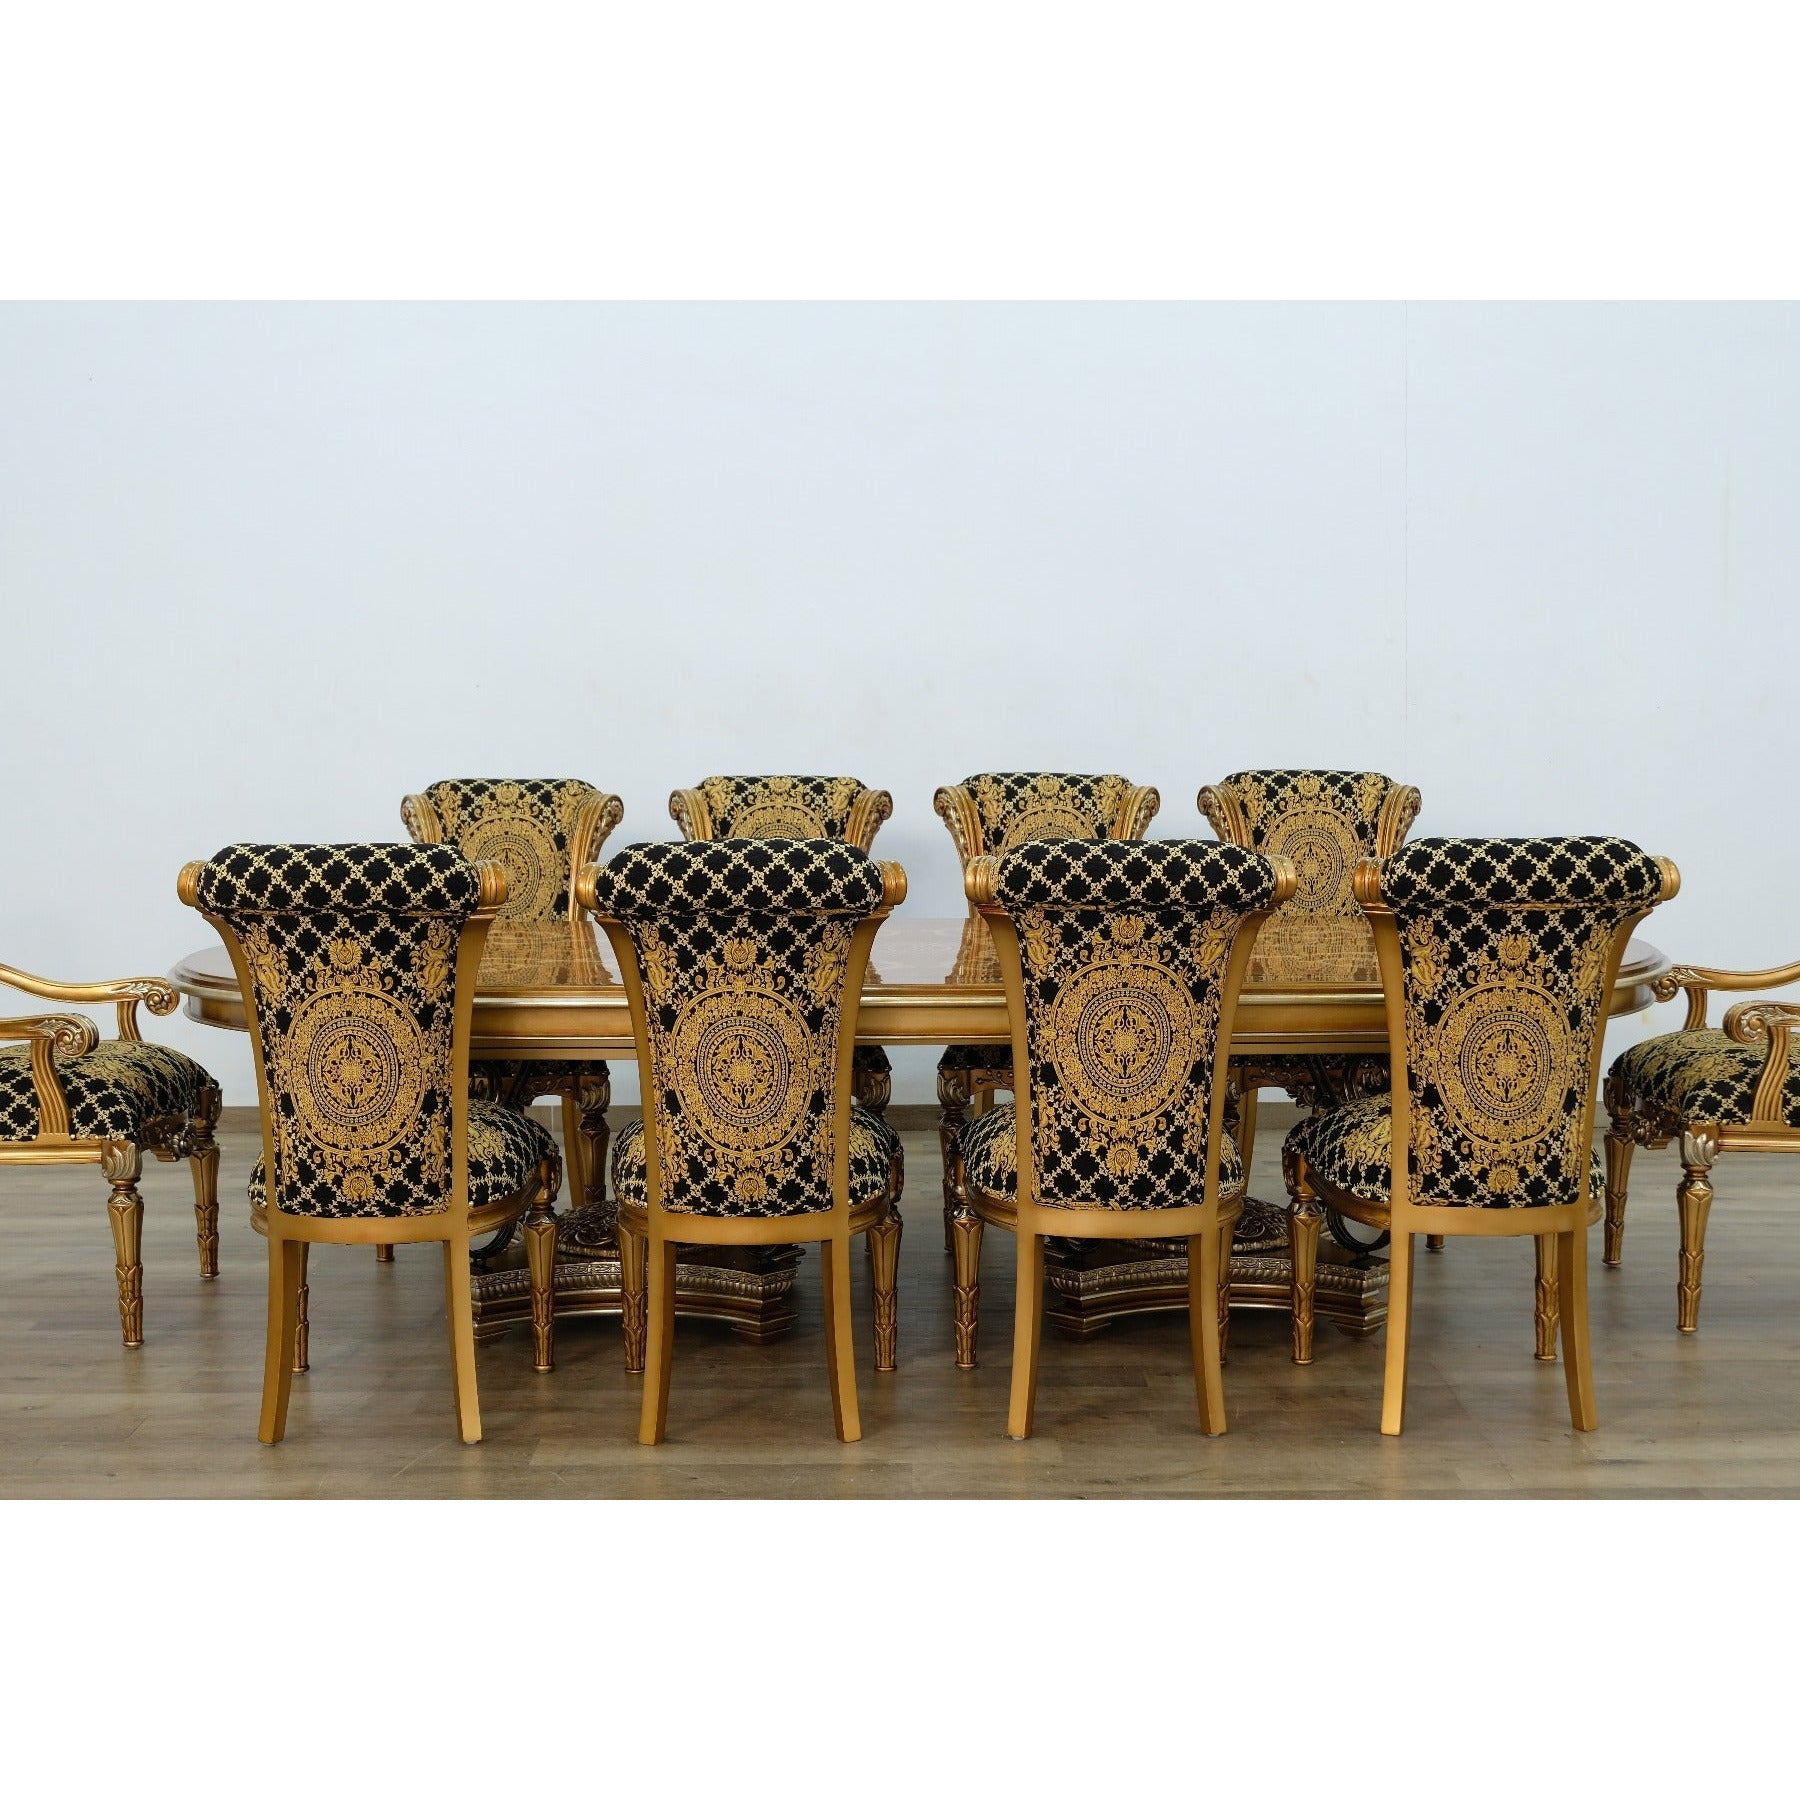 European Furniture - Valentina 7 Piece Dining Room Set in Black and Gold Leaf - 61958-7SET - New Star Living